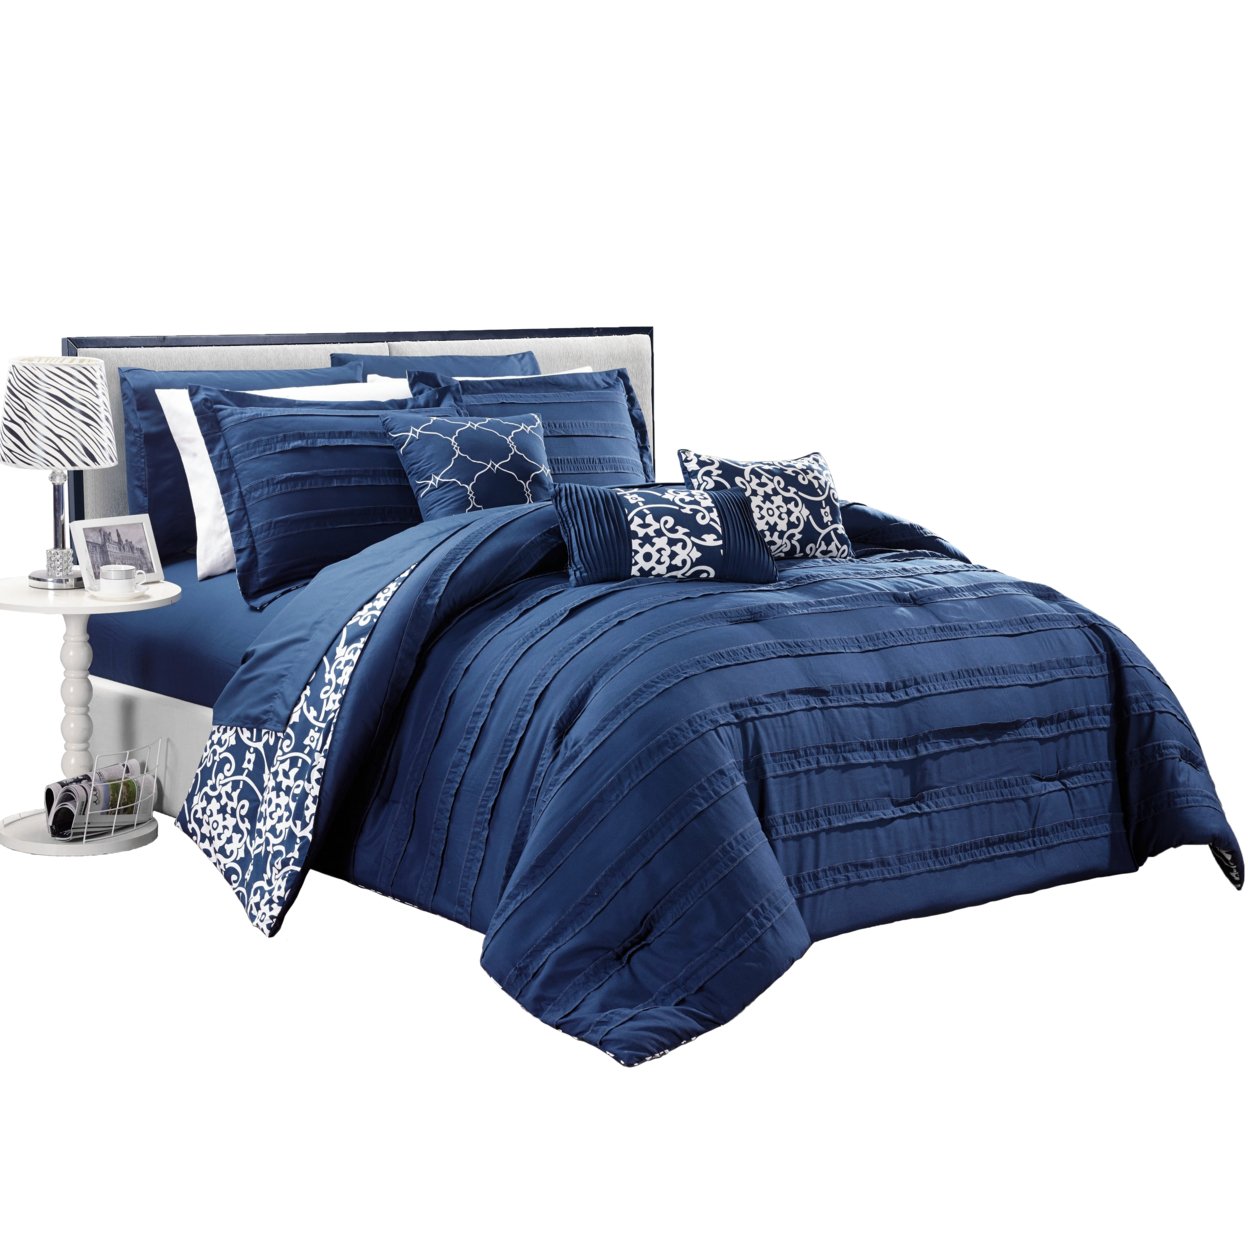 10-Piece Reversible Bed In A Bag Comforter & Sheet Set, Multiple Colors - Aqua, Queen